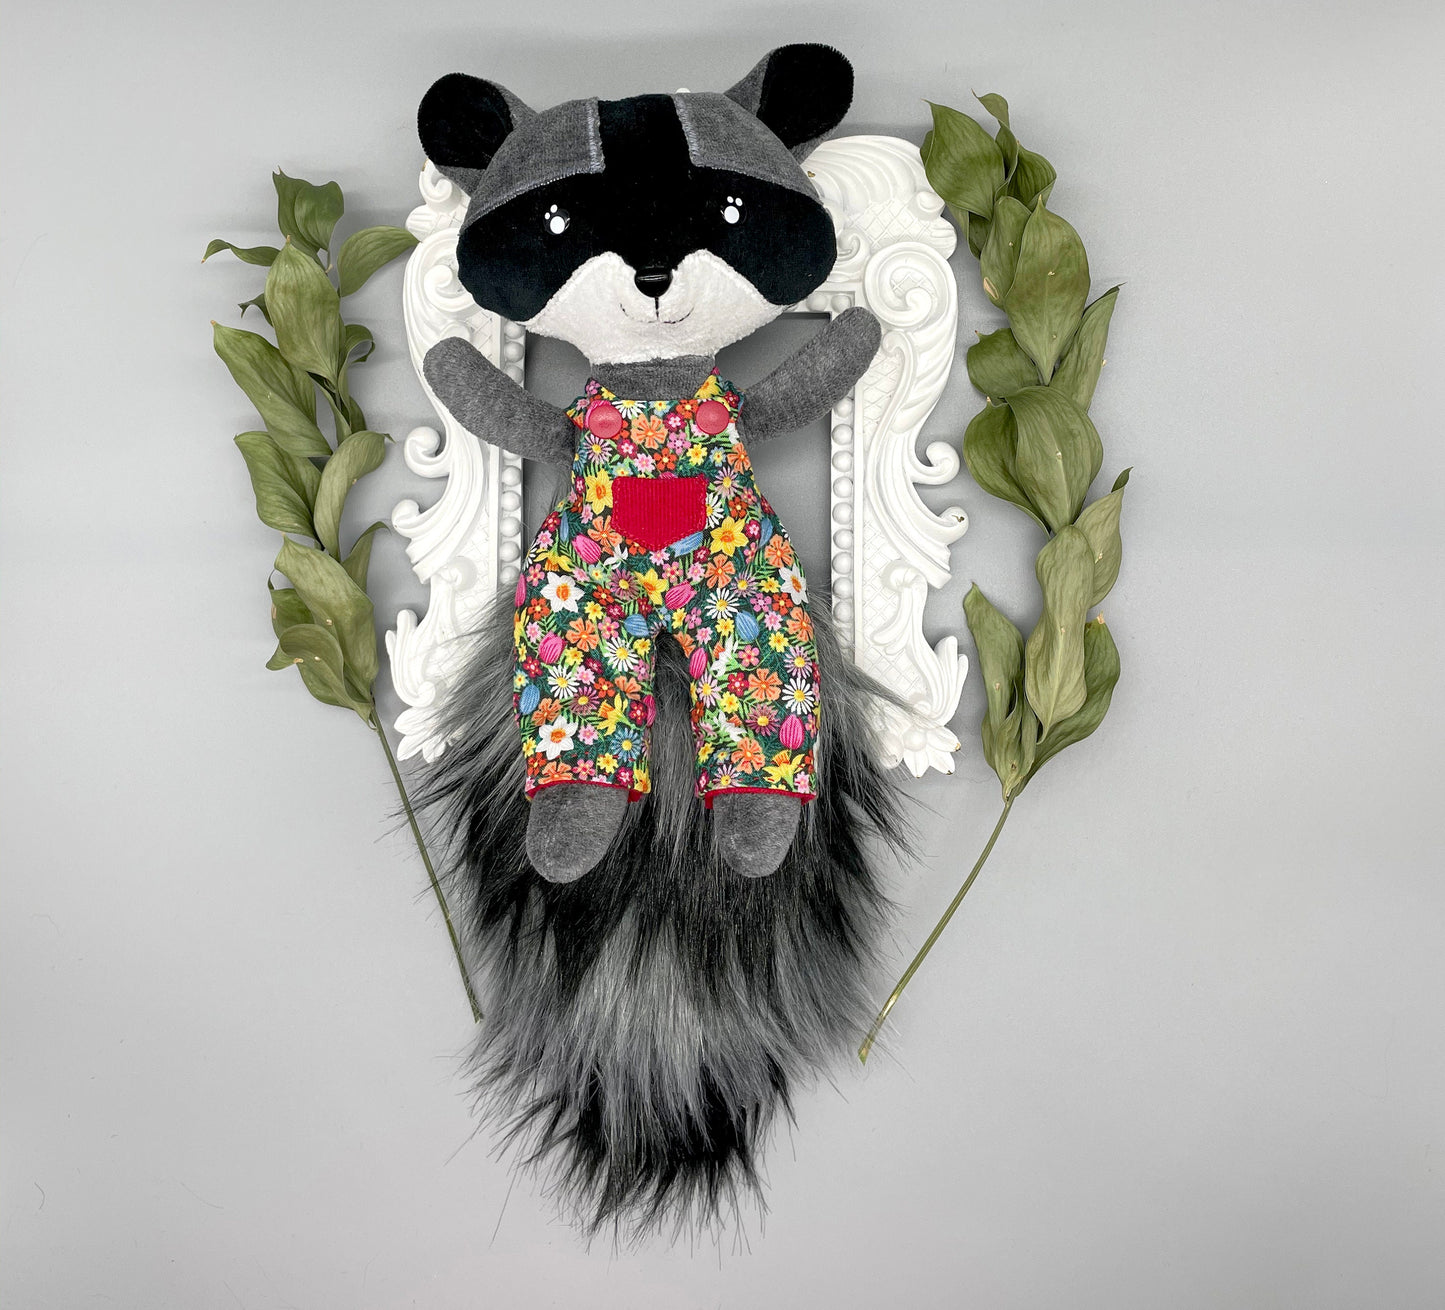 Handmade BABY RACCOON Doll, Stuffed raccoon, stuffed animals, boy doll, raccoon doll, raccoon toy, trash panda, gift for kids, doll, unique